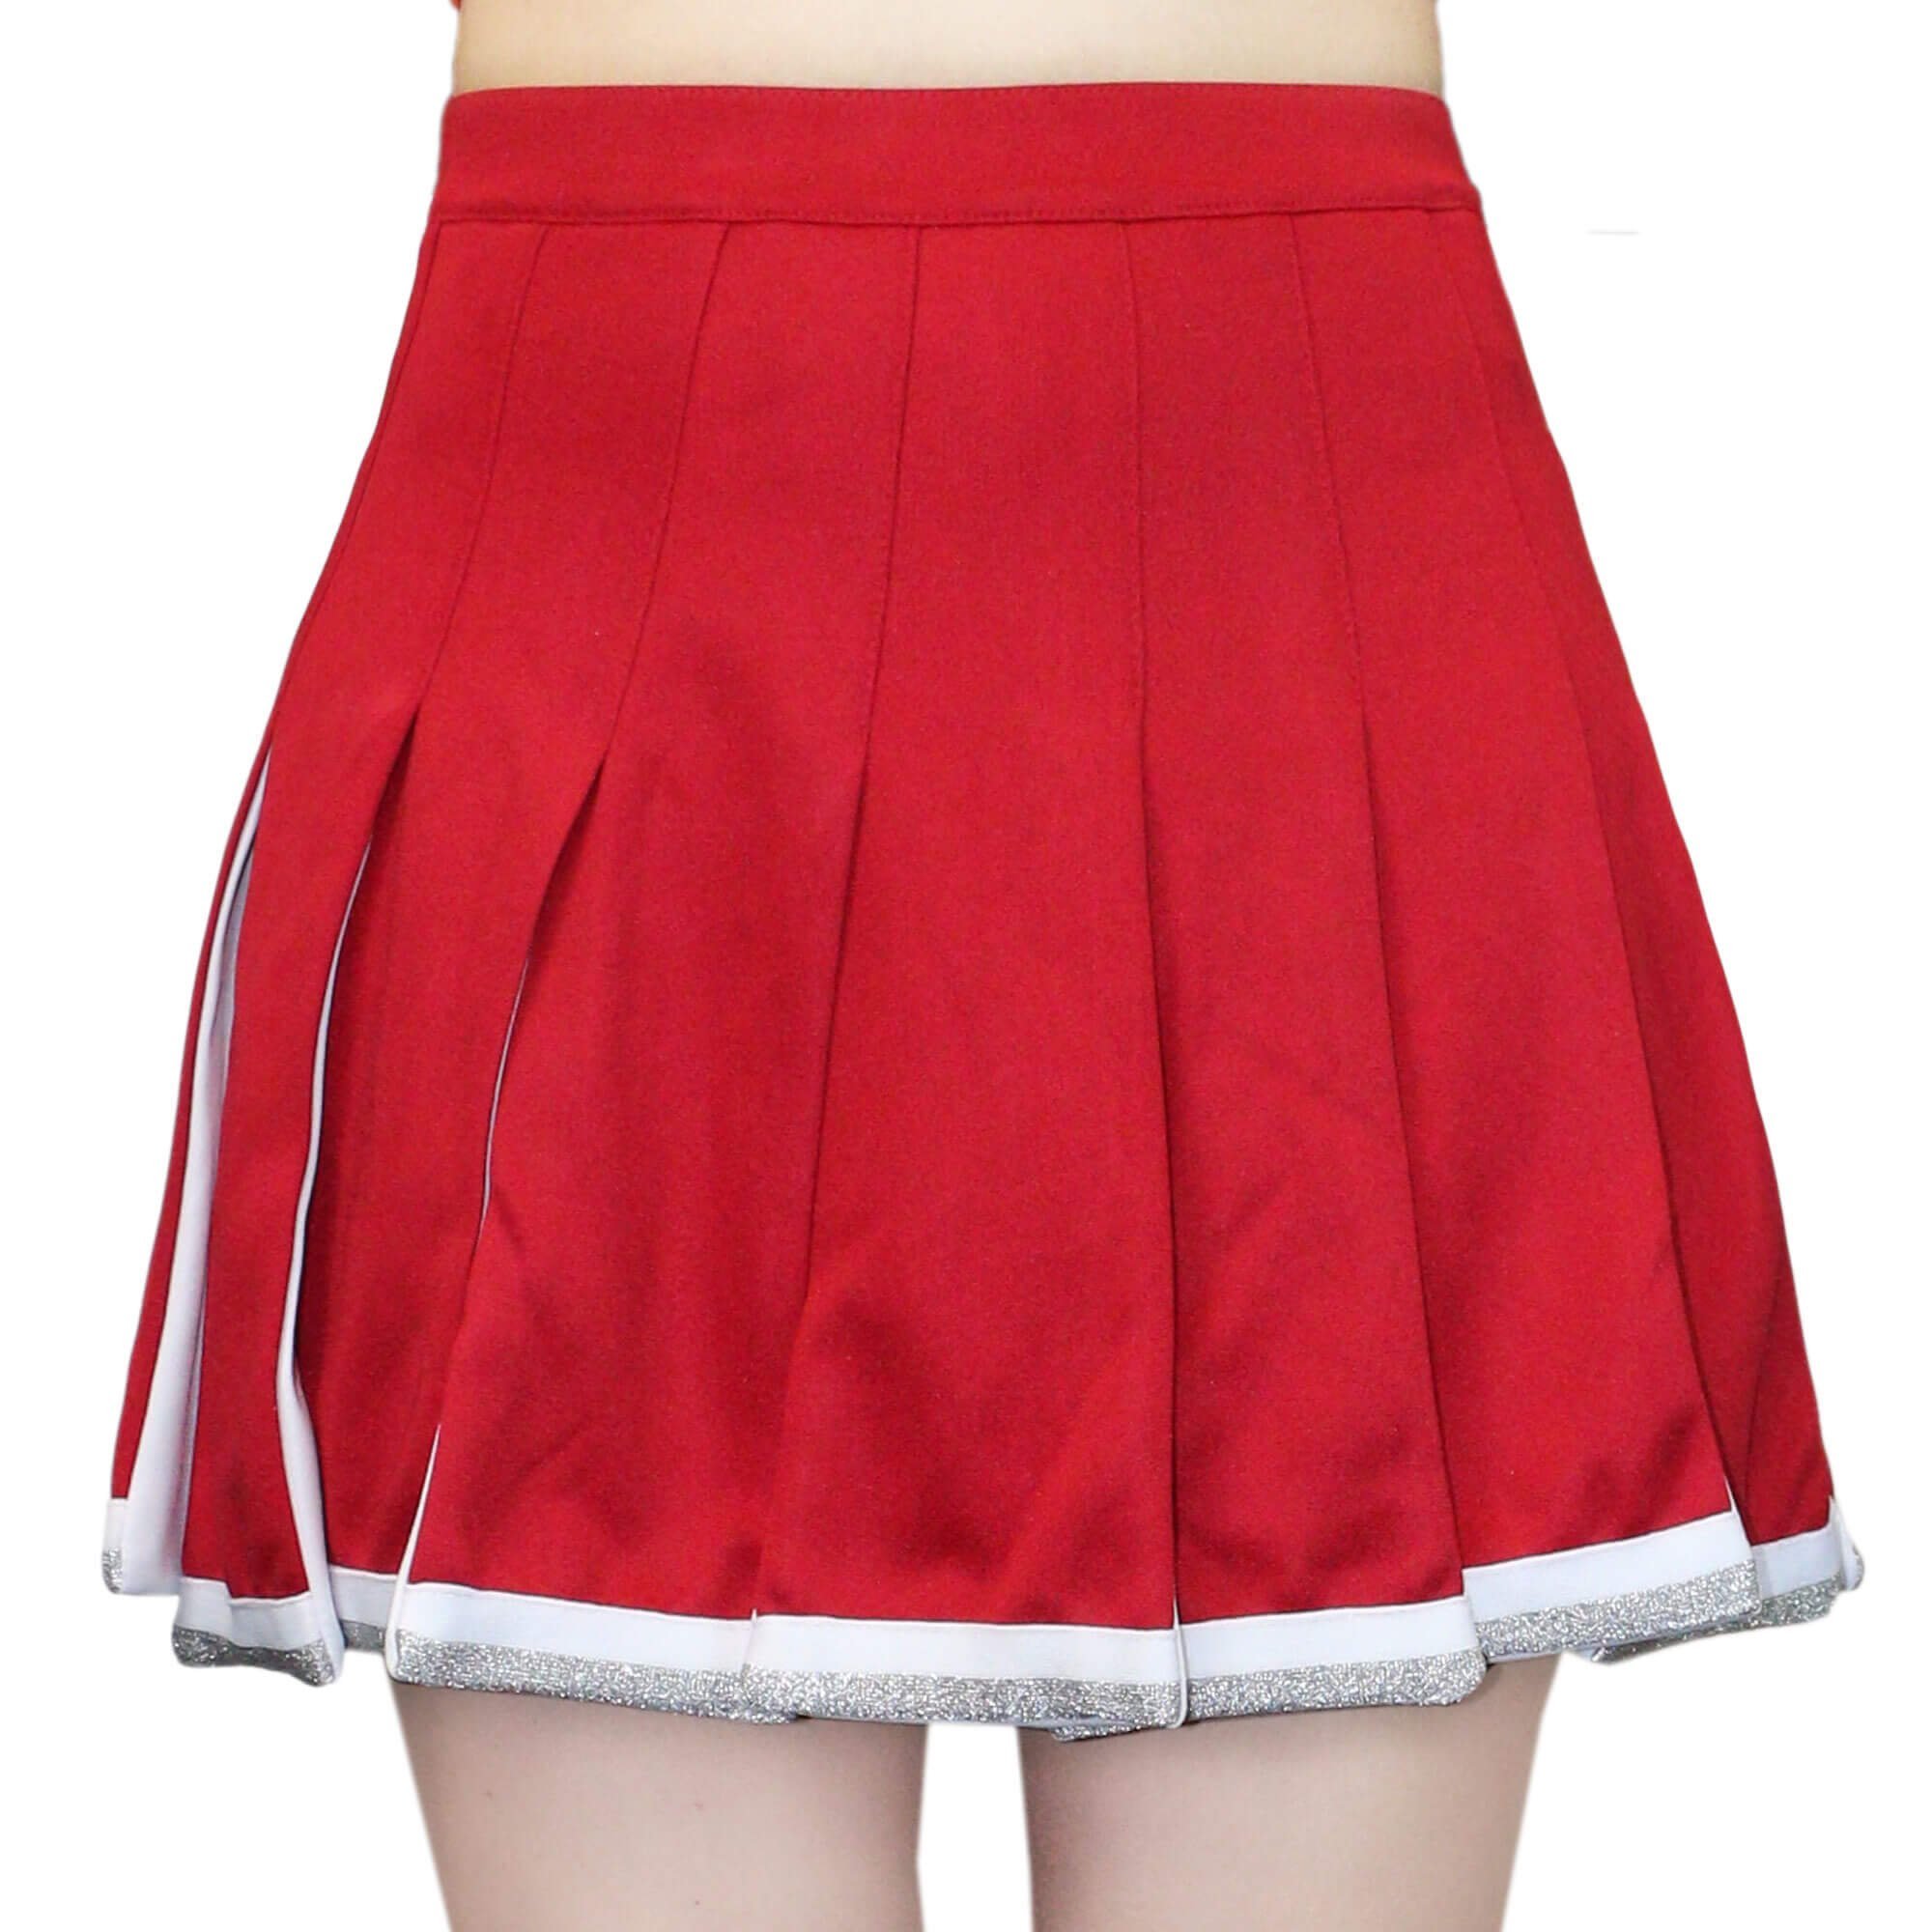 Danzcue Adult Cheerleading Pleated Skirt